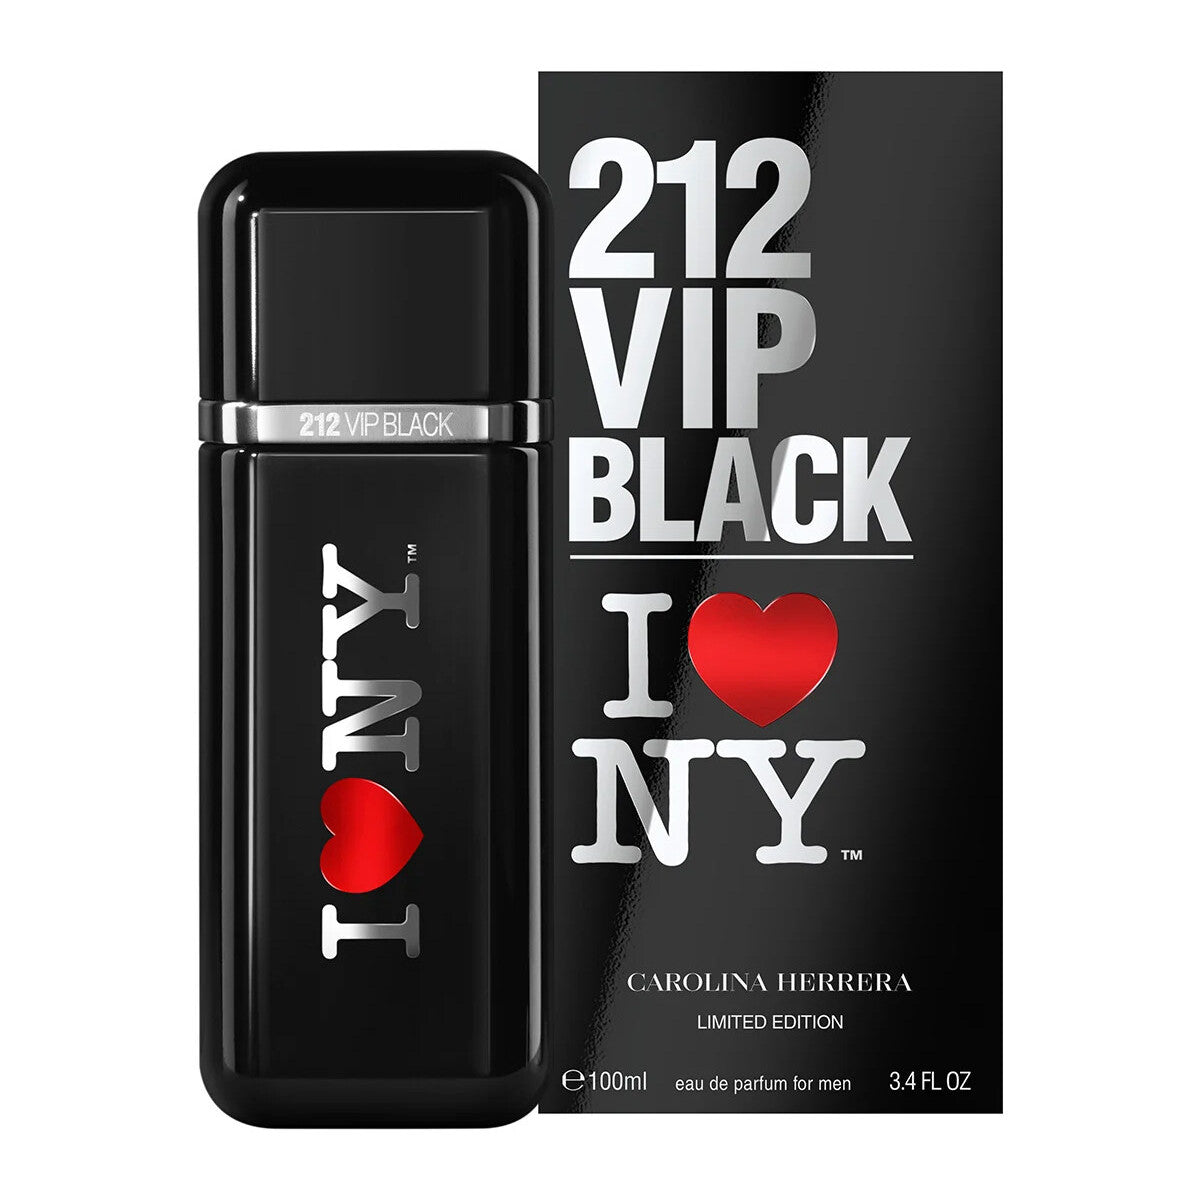 Черный вип. Carolina Herrera 212 VIP men Black. 212 VIP Black лэтуаль.